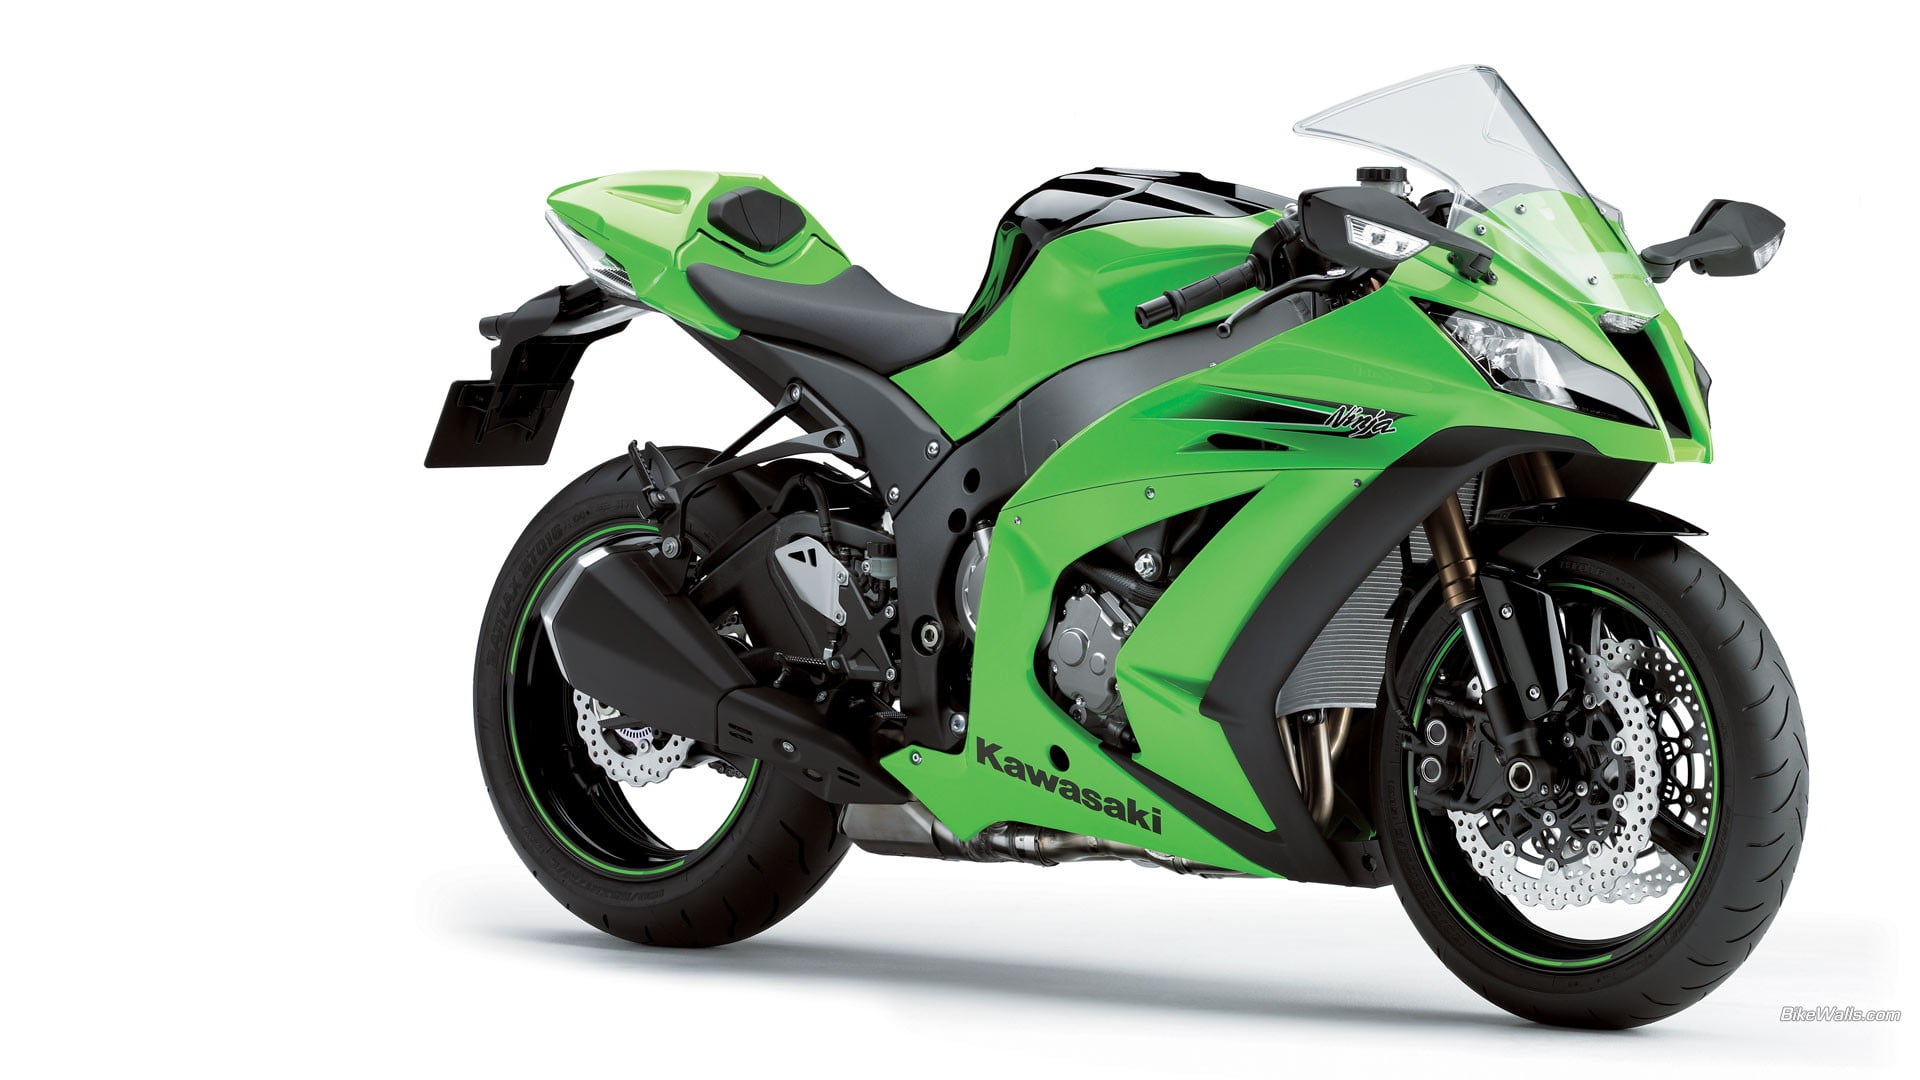 green Kawasaki Ninja sportbike, Kawasaki, Kawasaki ninja, superbike, motorcycle